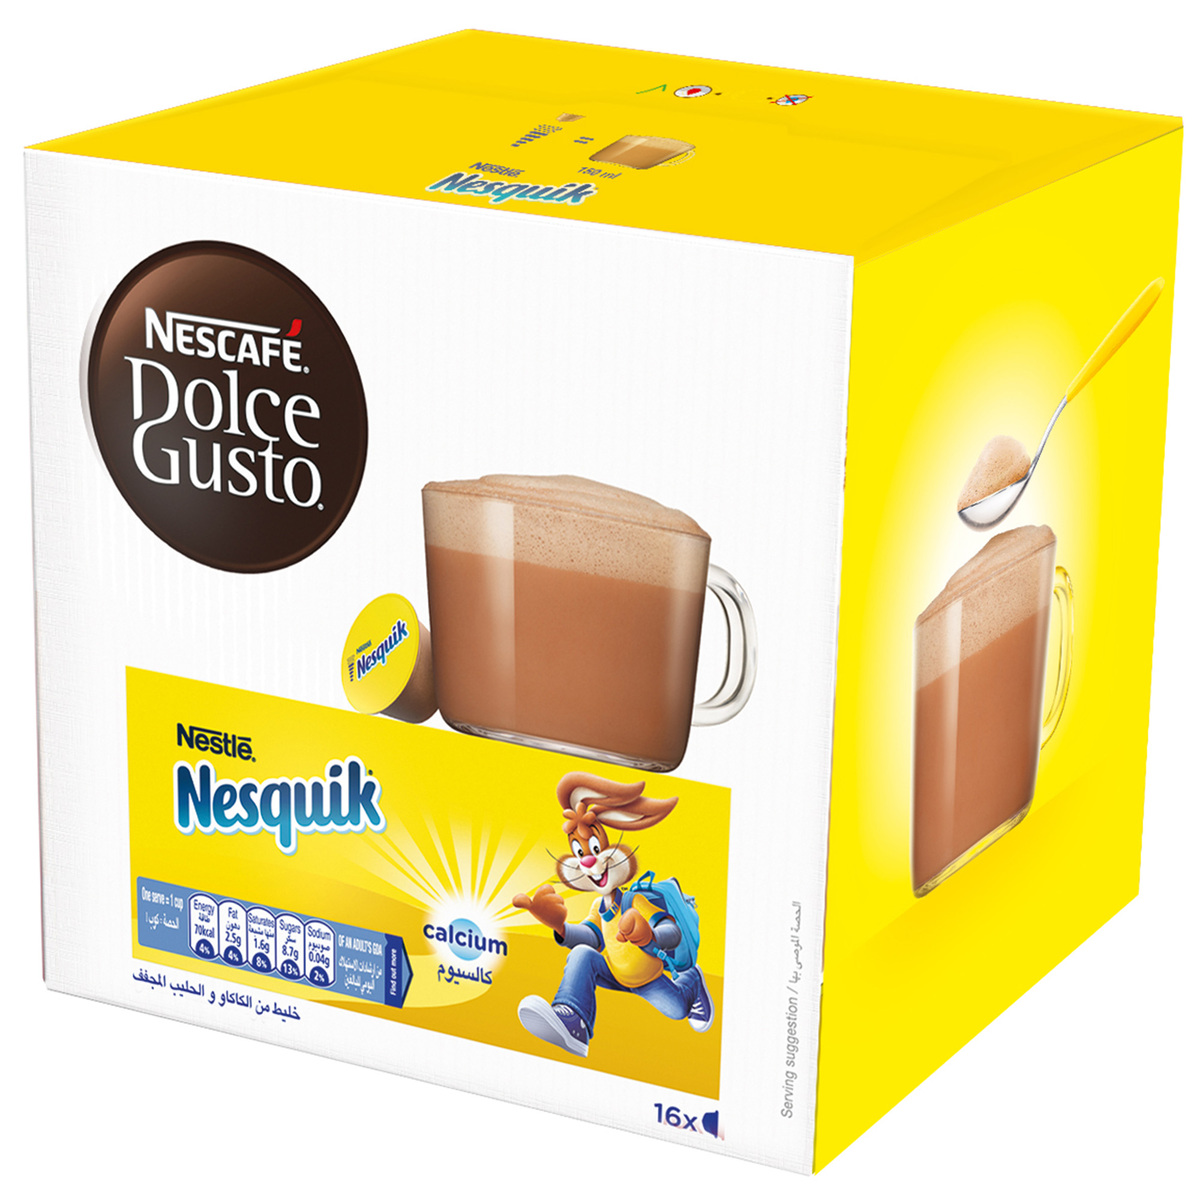 Nescafe Dolce Gusto Nesquik Chocolate Capsules 16 pcs